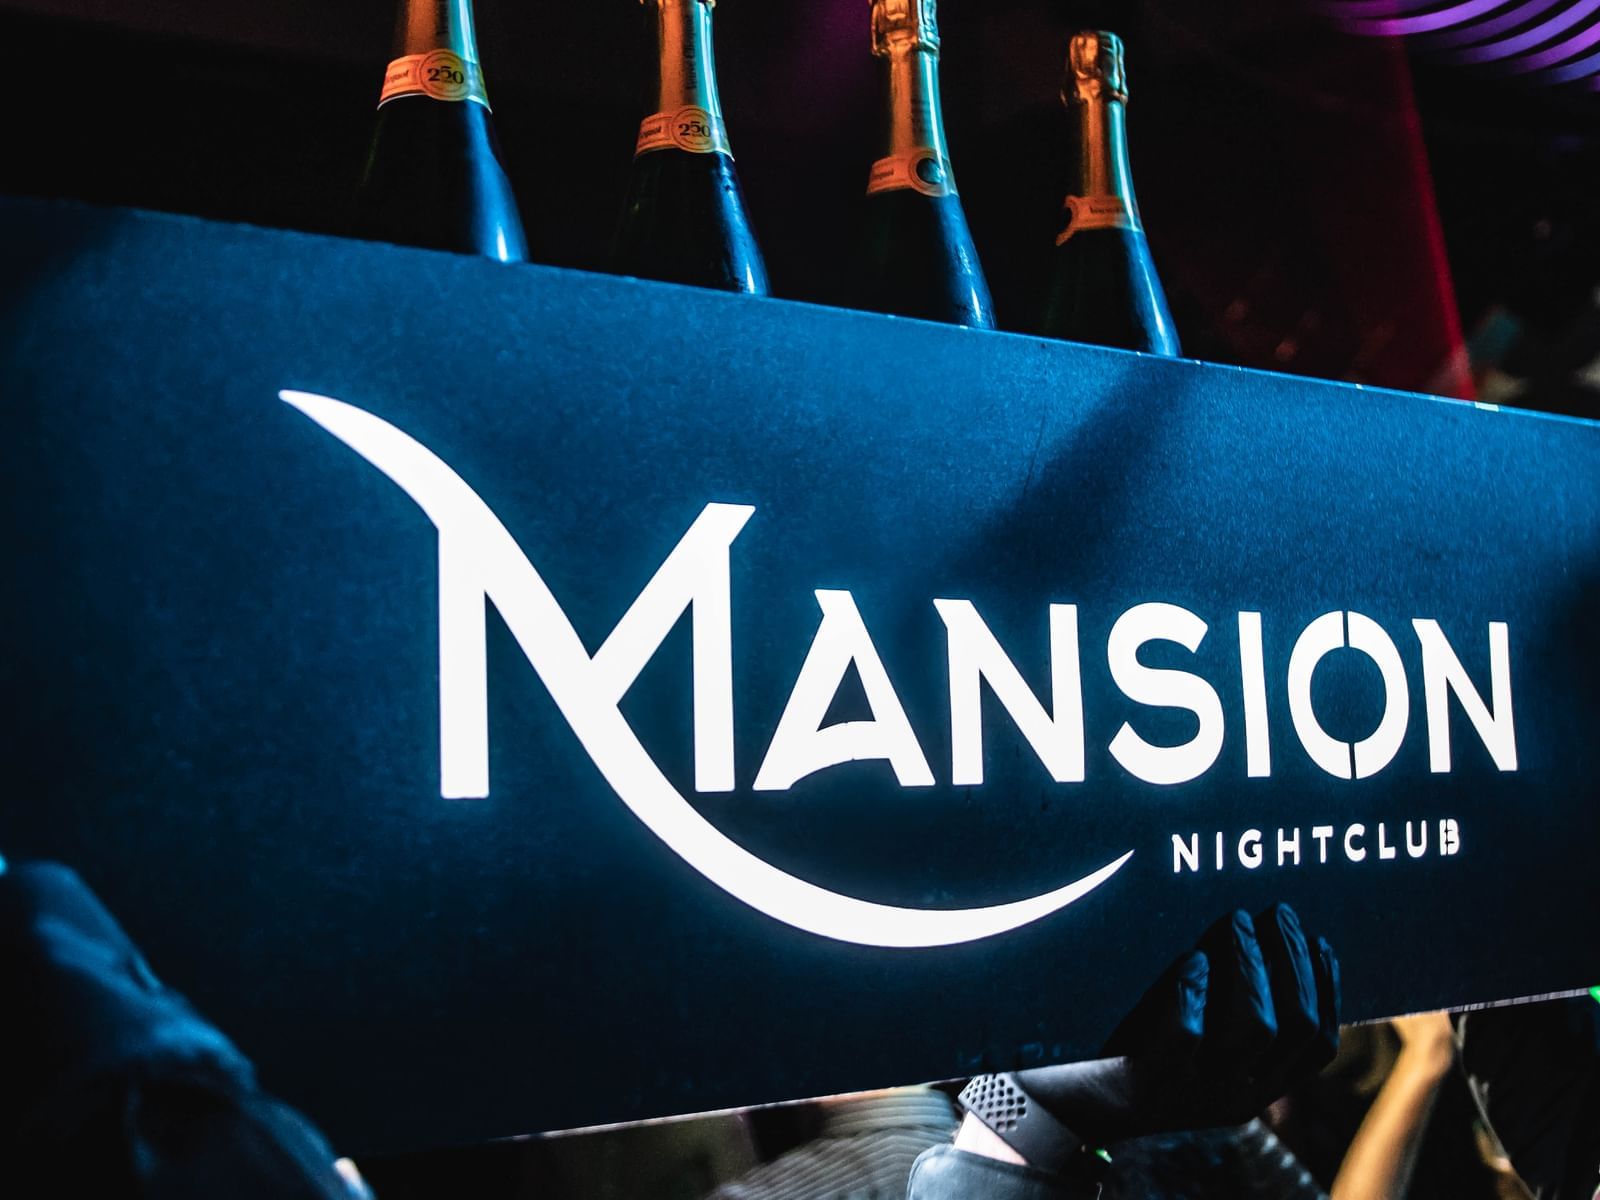 Mansion nightclub paradox hotel vancouver